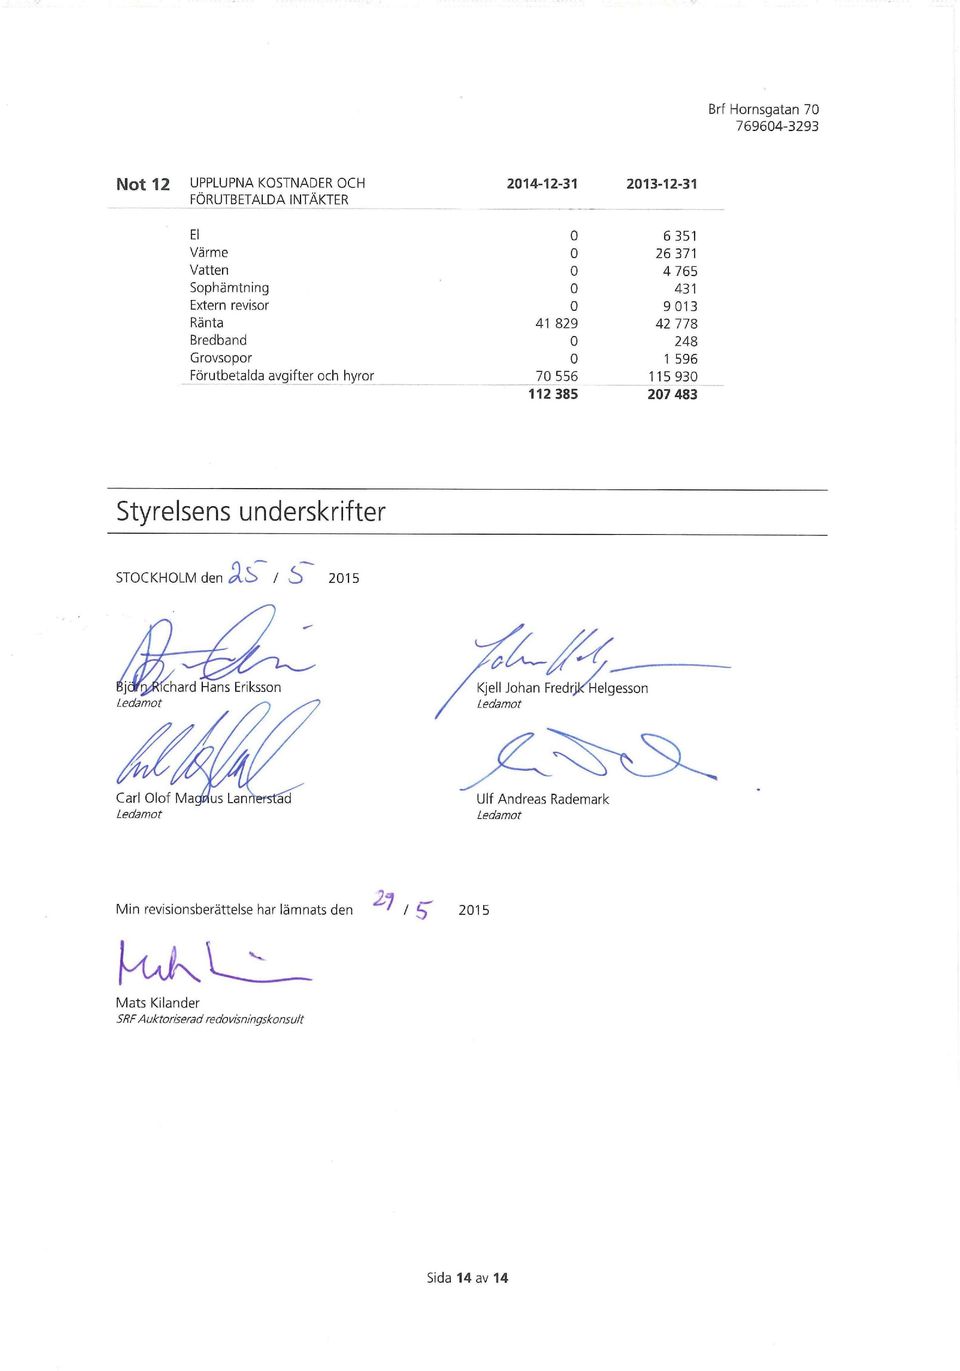 385 27 483 Styrelsens underskrifter STOCKHOLM den / 6" 215 Bjdtn^Rfchard Hans Eriksson Kjell Johan Fredrjk' Helgesson Carl Olof Ma Ulf